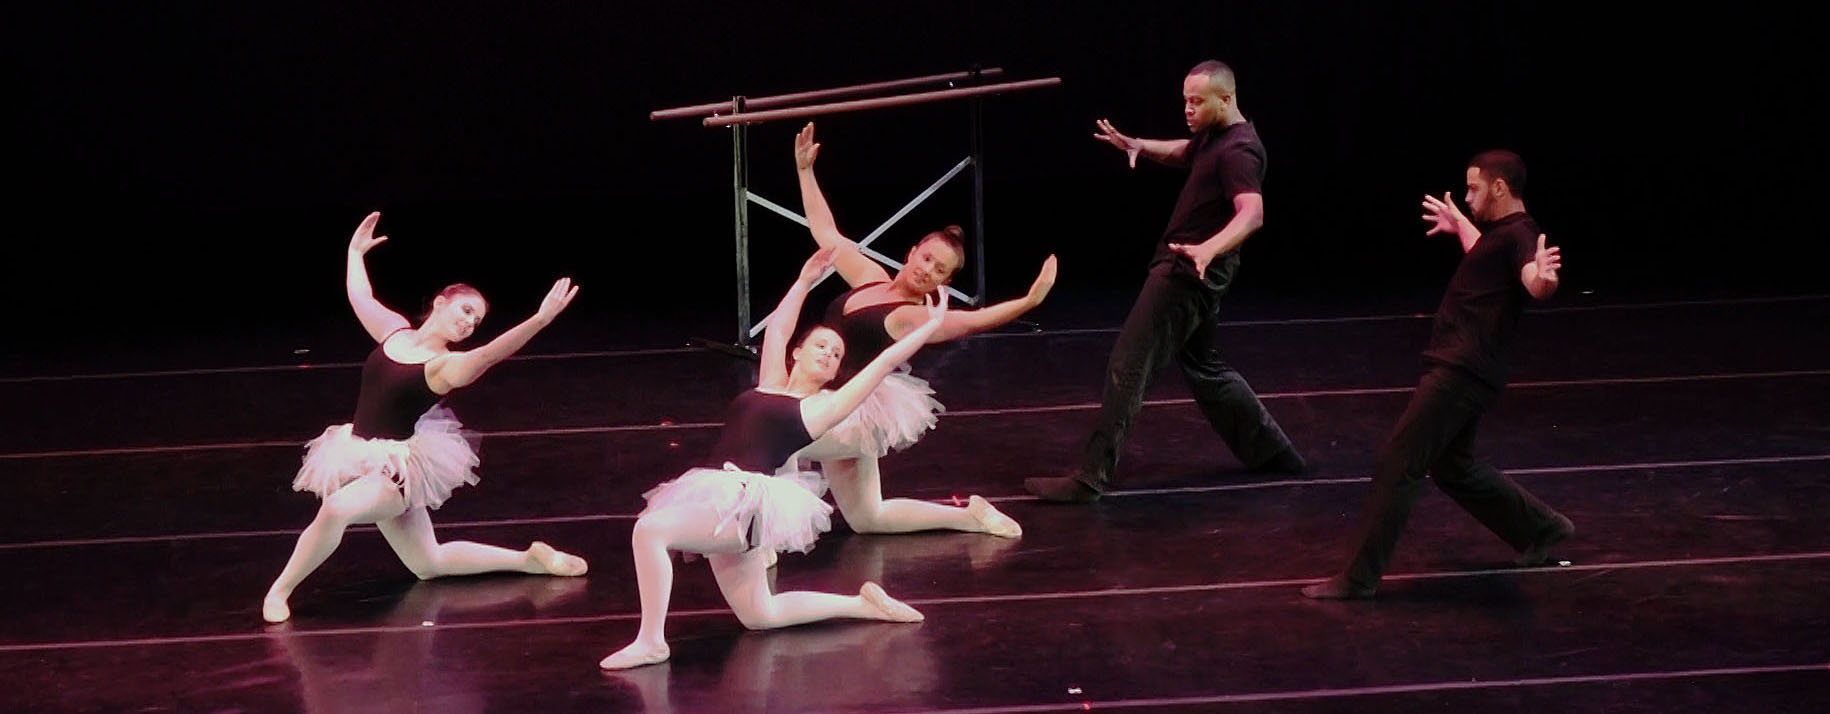 Video still frame of Dance Performance at Wilkes University